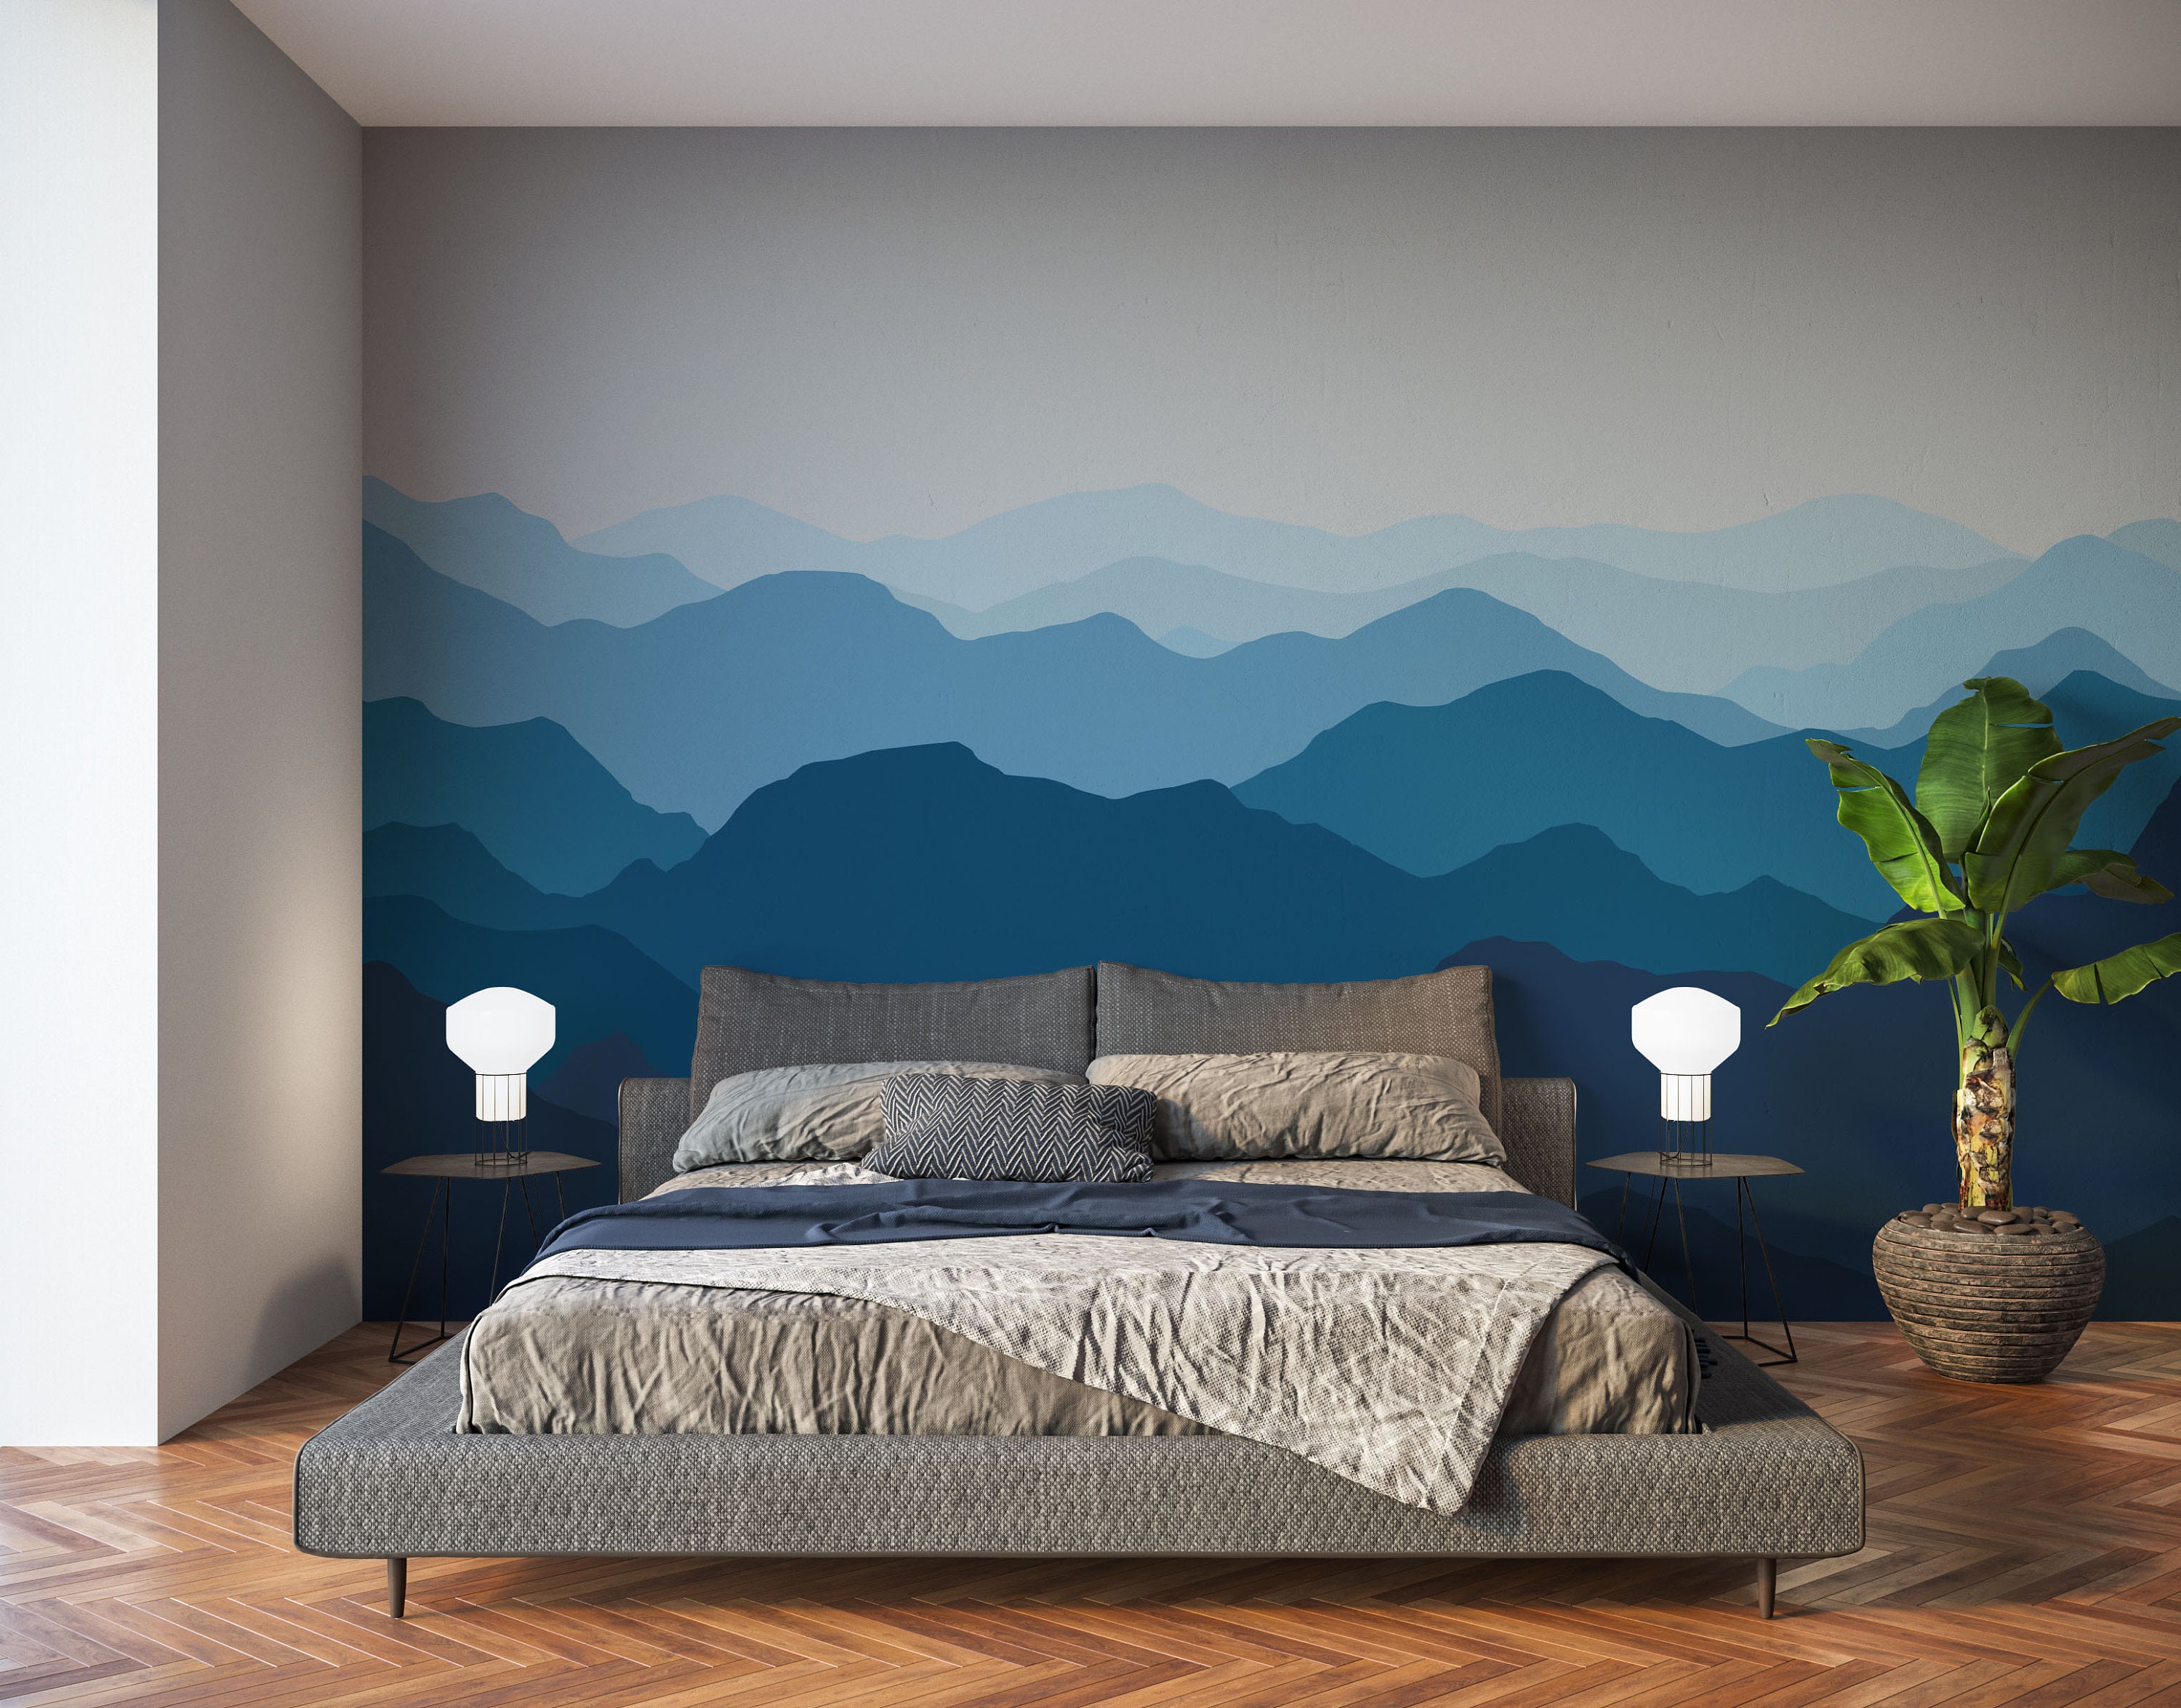 Mountain Wall Mural. Self-adhesive Removable Wallpaper. Custom | Etsy